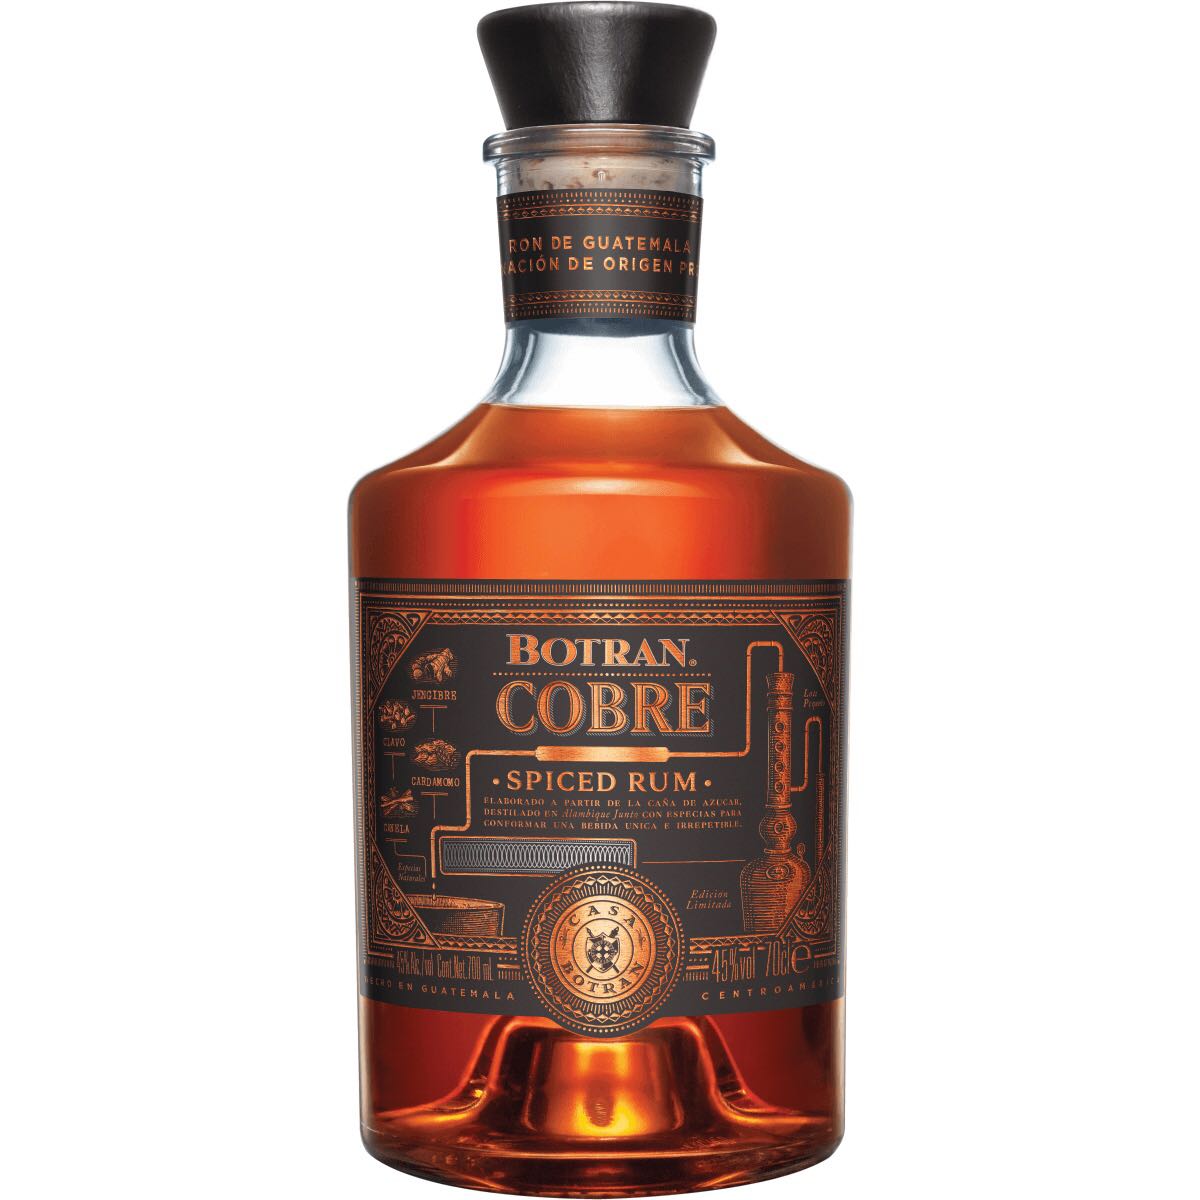 Bottle image of Botran Cobre